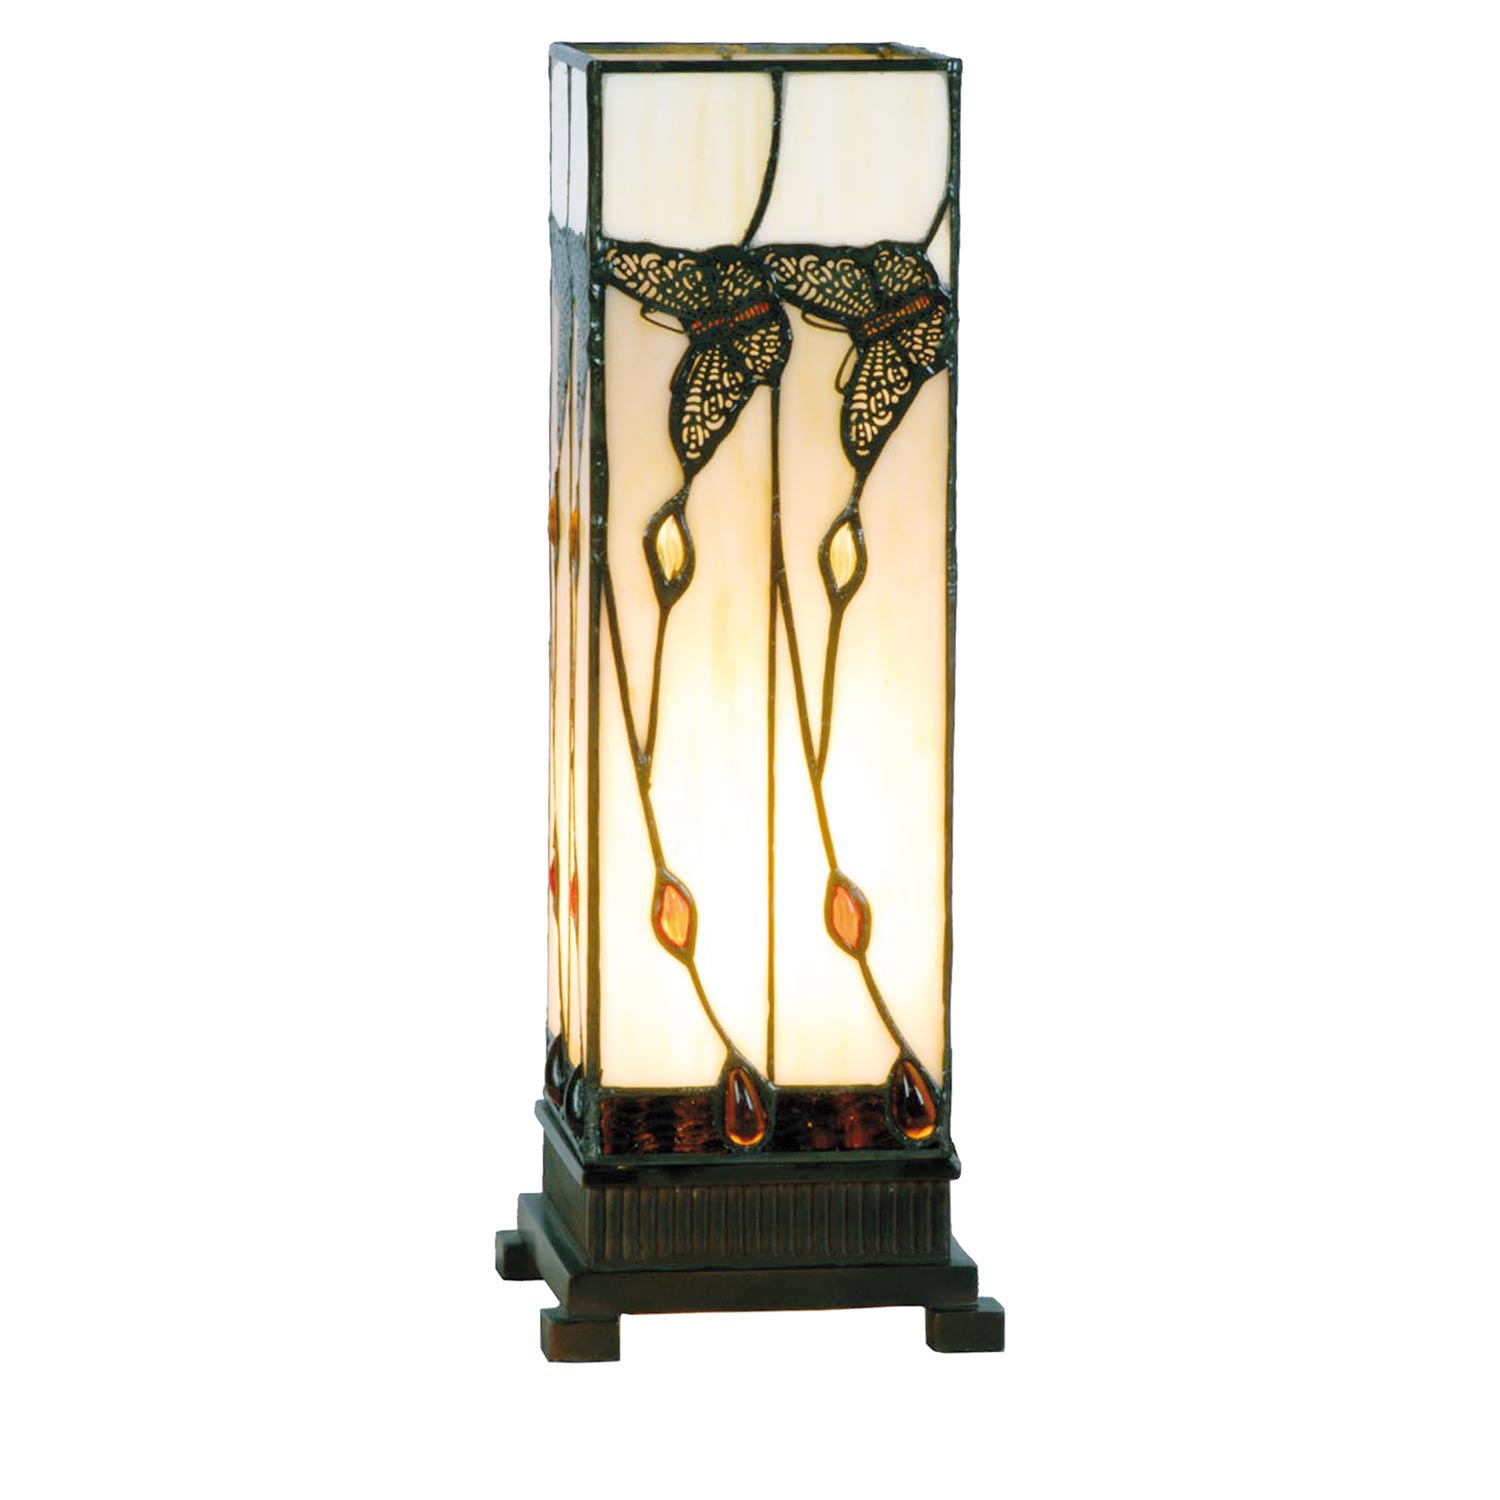 Säulenlampe im Tiffany-Stil 35x12.5cm Schmetterling